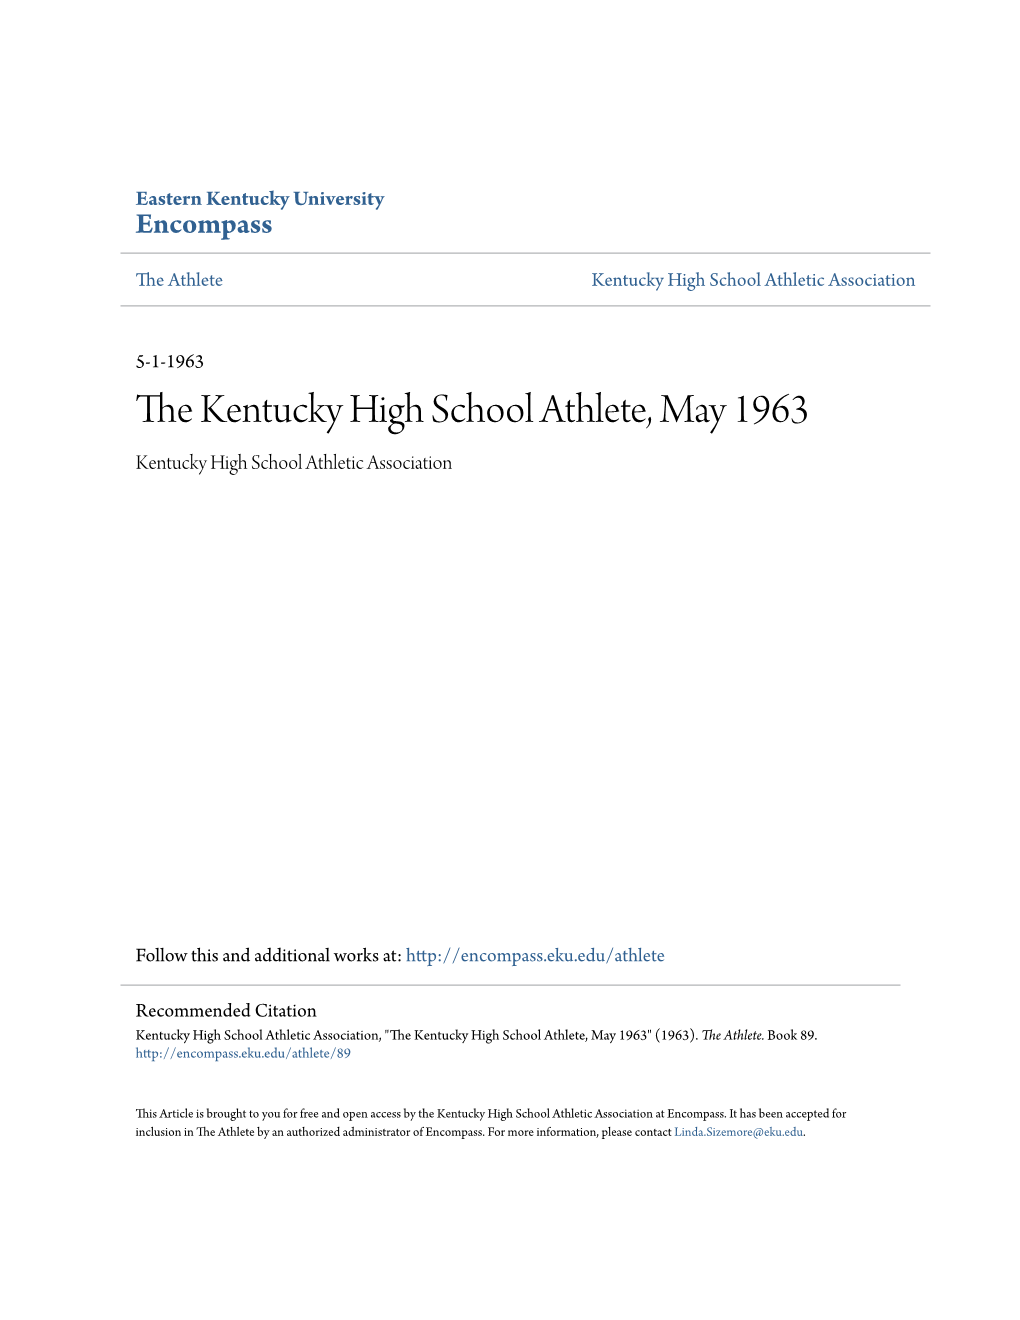 The Kentucky High School Athlete, May 1963 Kentucky High School Athletic Association